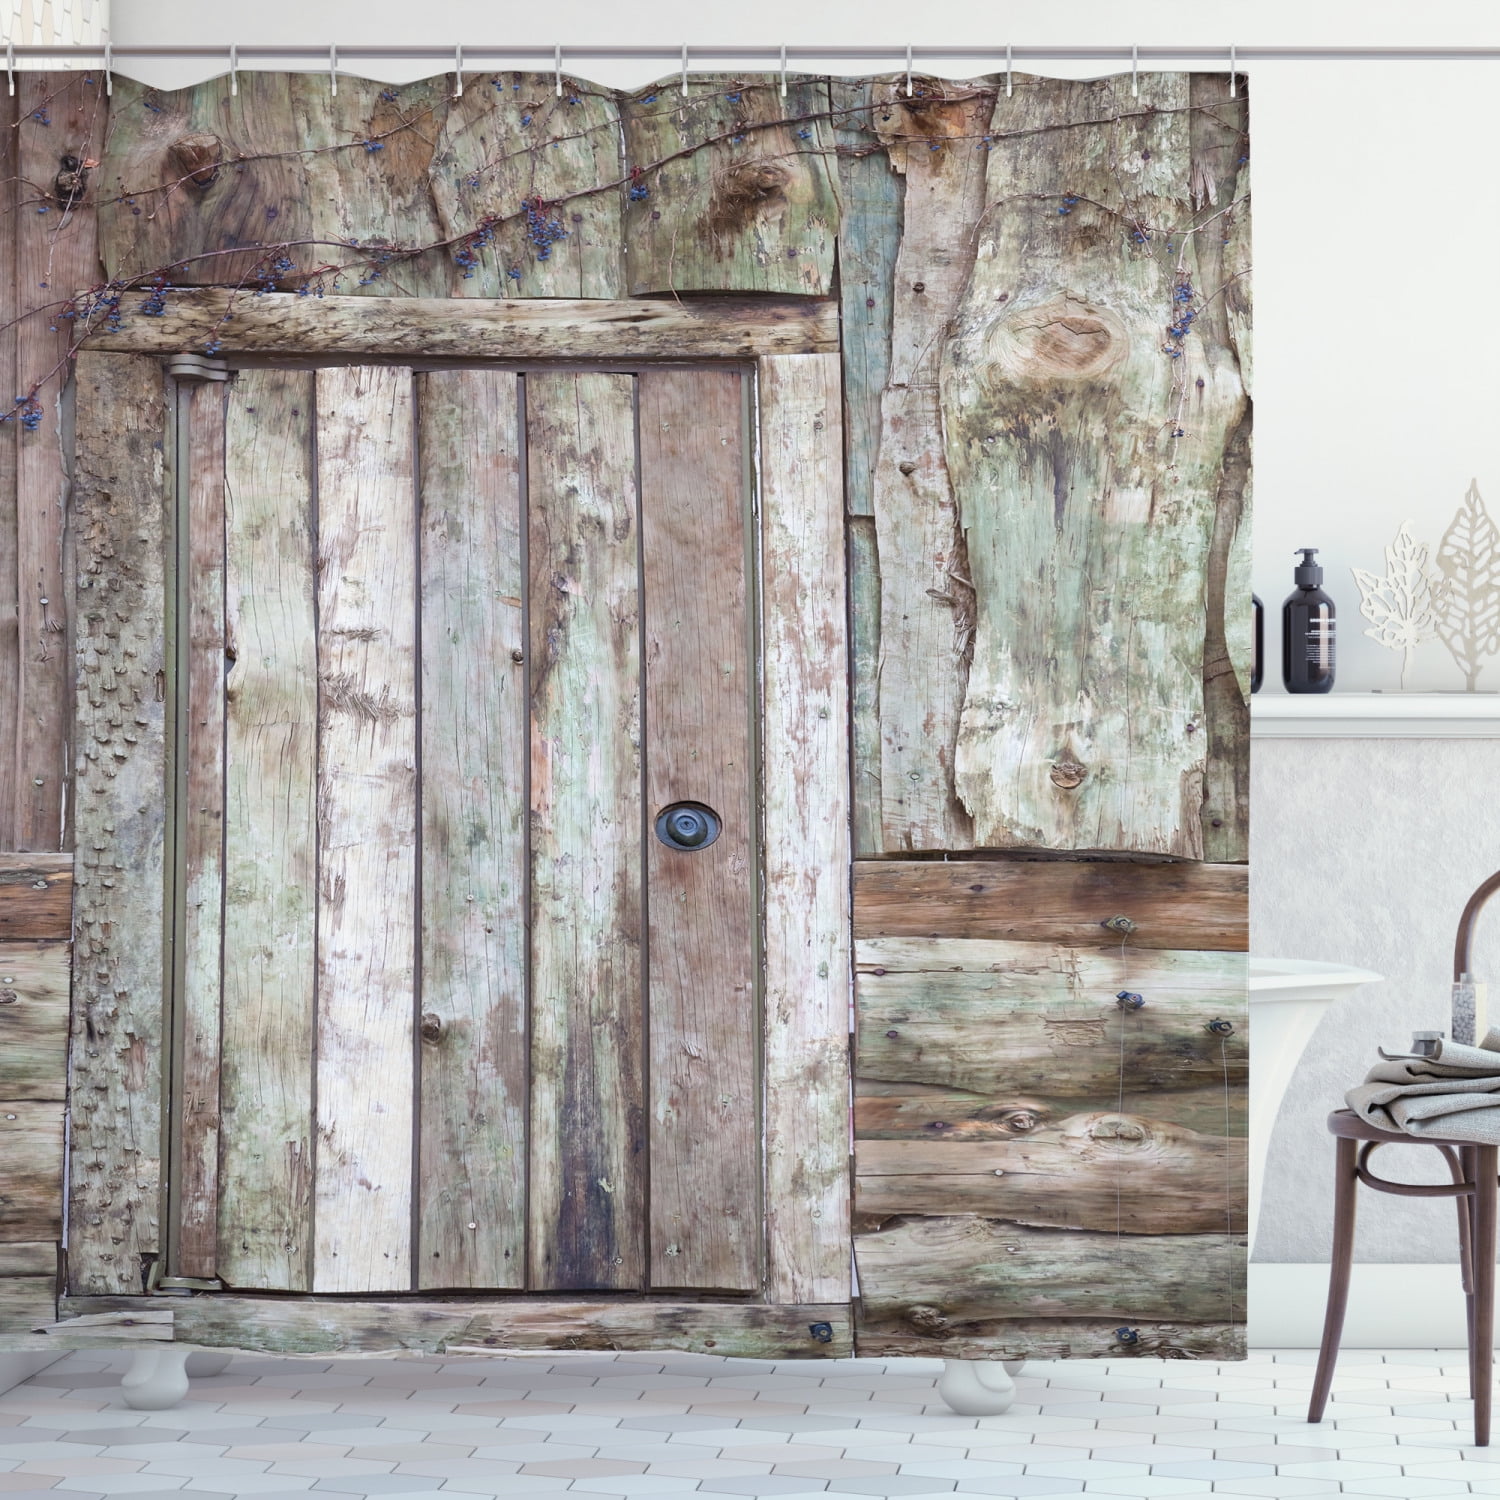 Rustic Wooden old Barn Door Theme Shower Curtain Set Bathroom Waterproof Fabric 